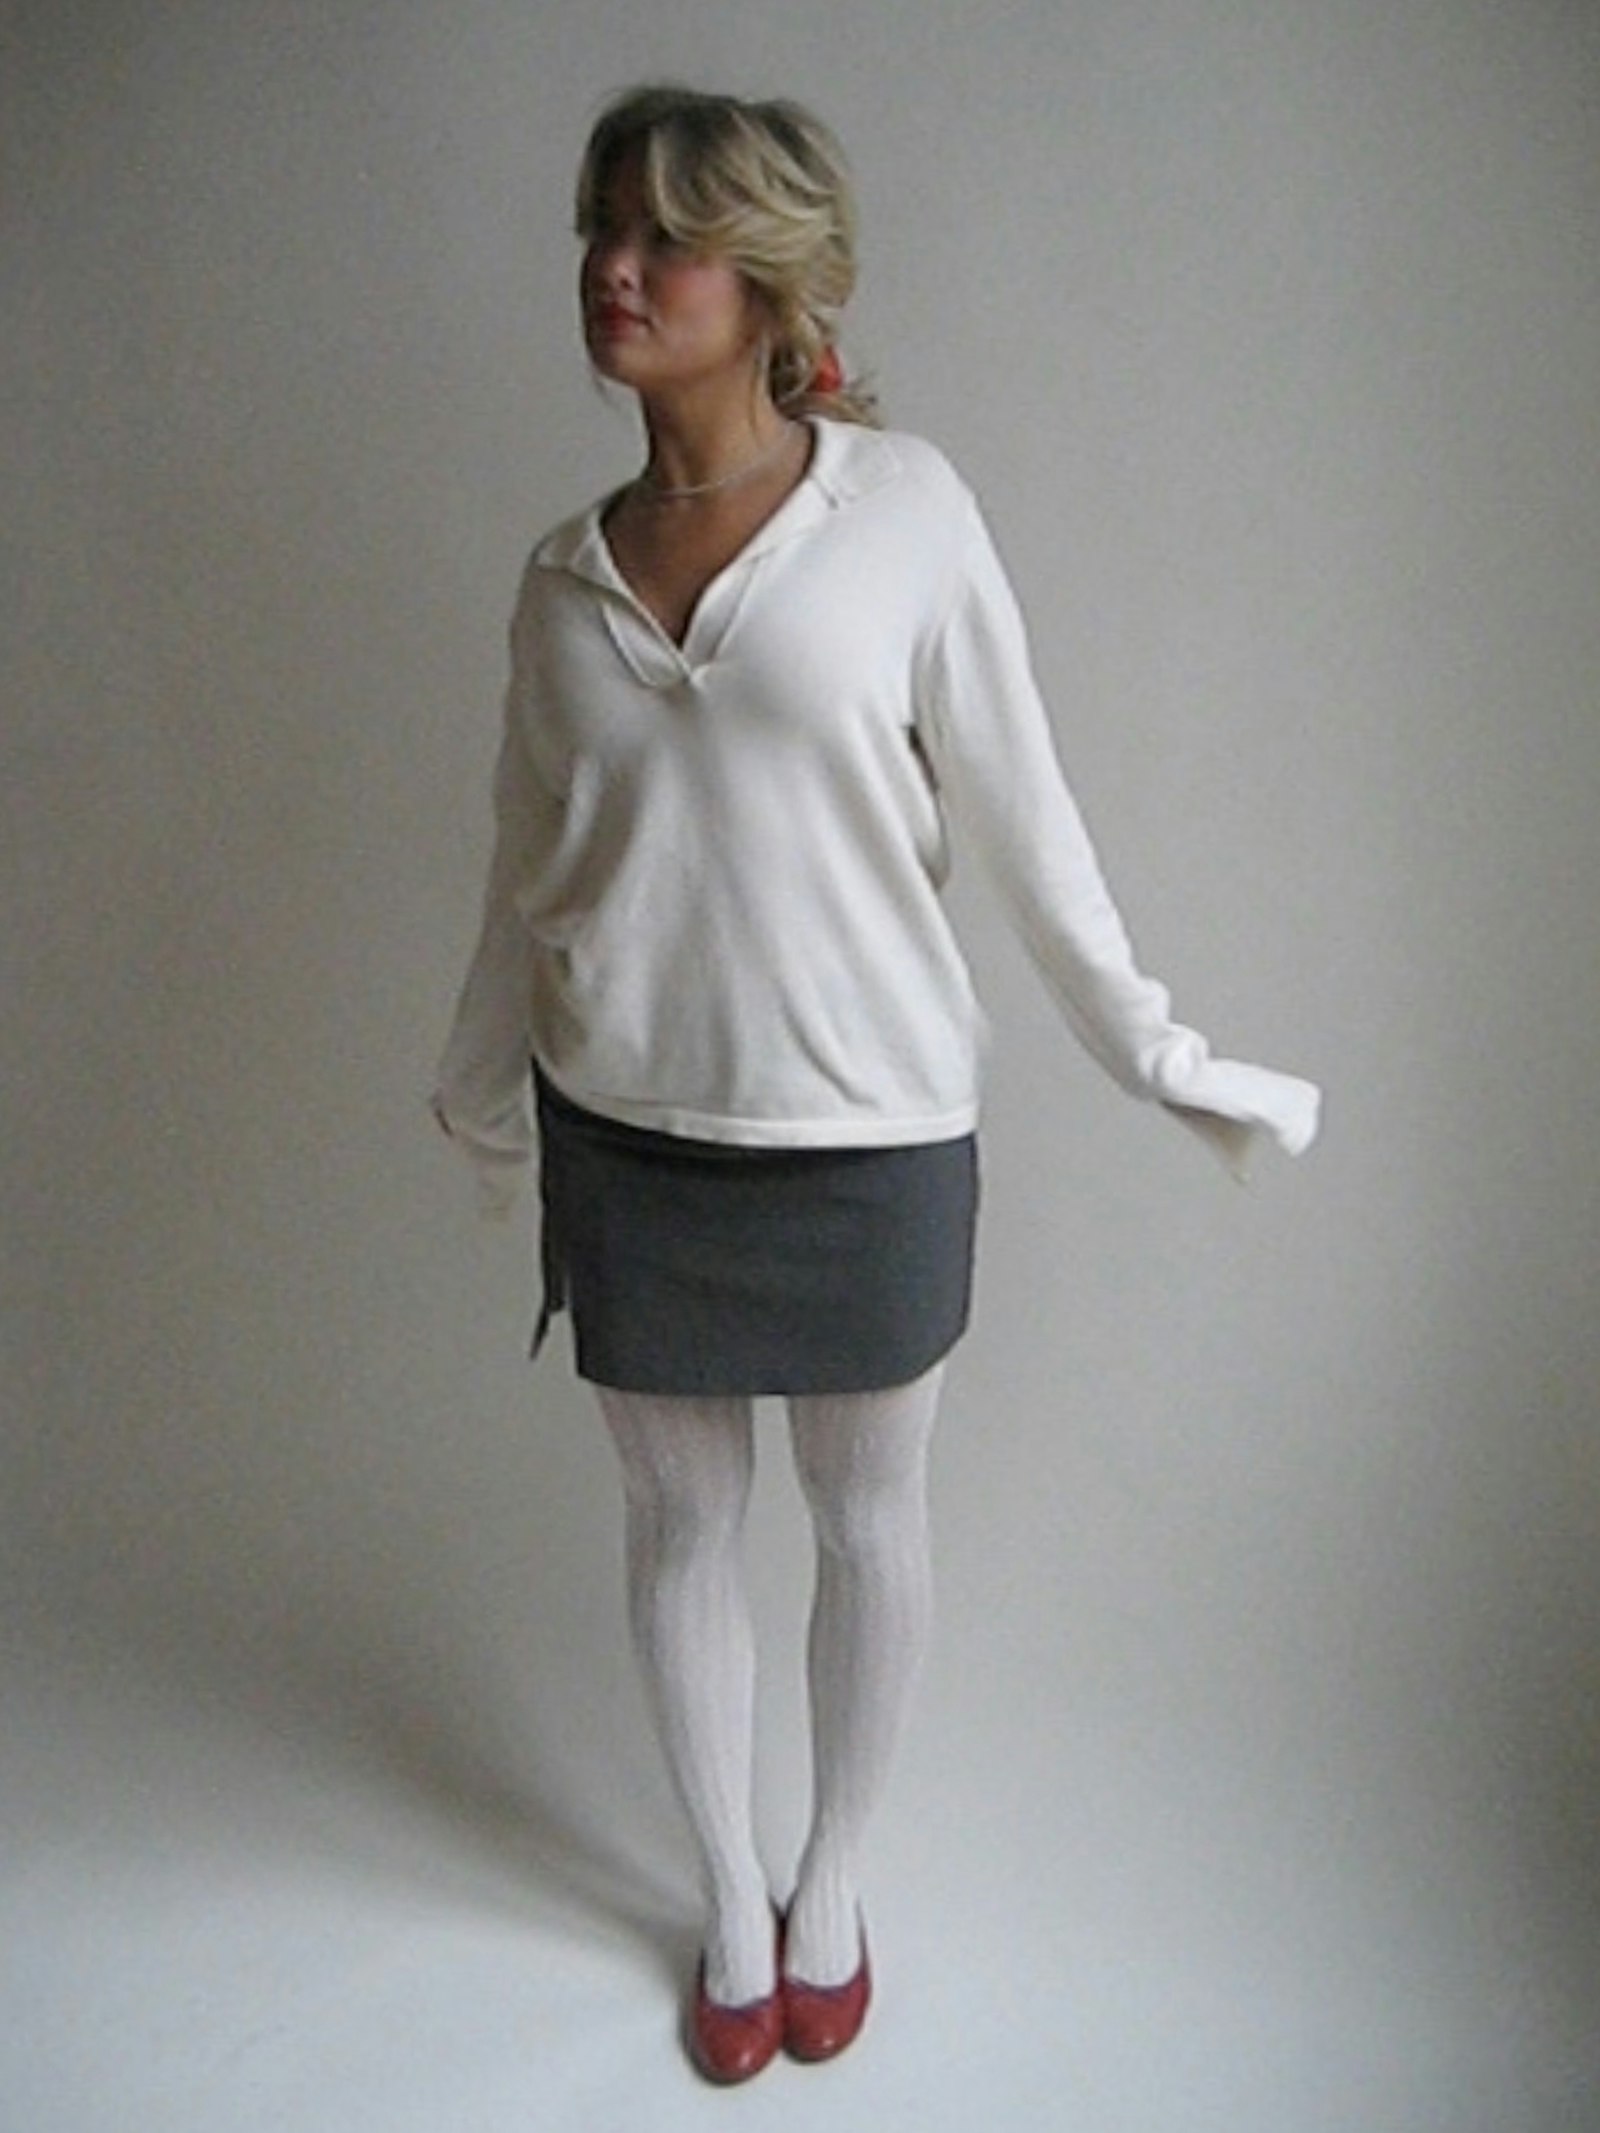 Shape Charcoal Grey Contour Jersey Mini Skirt